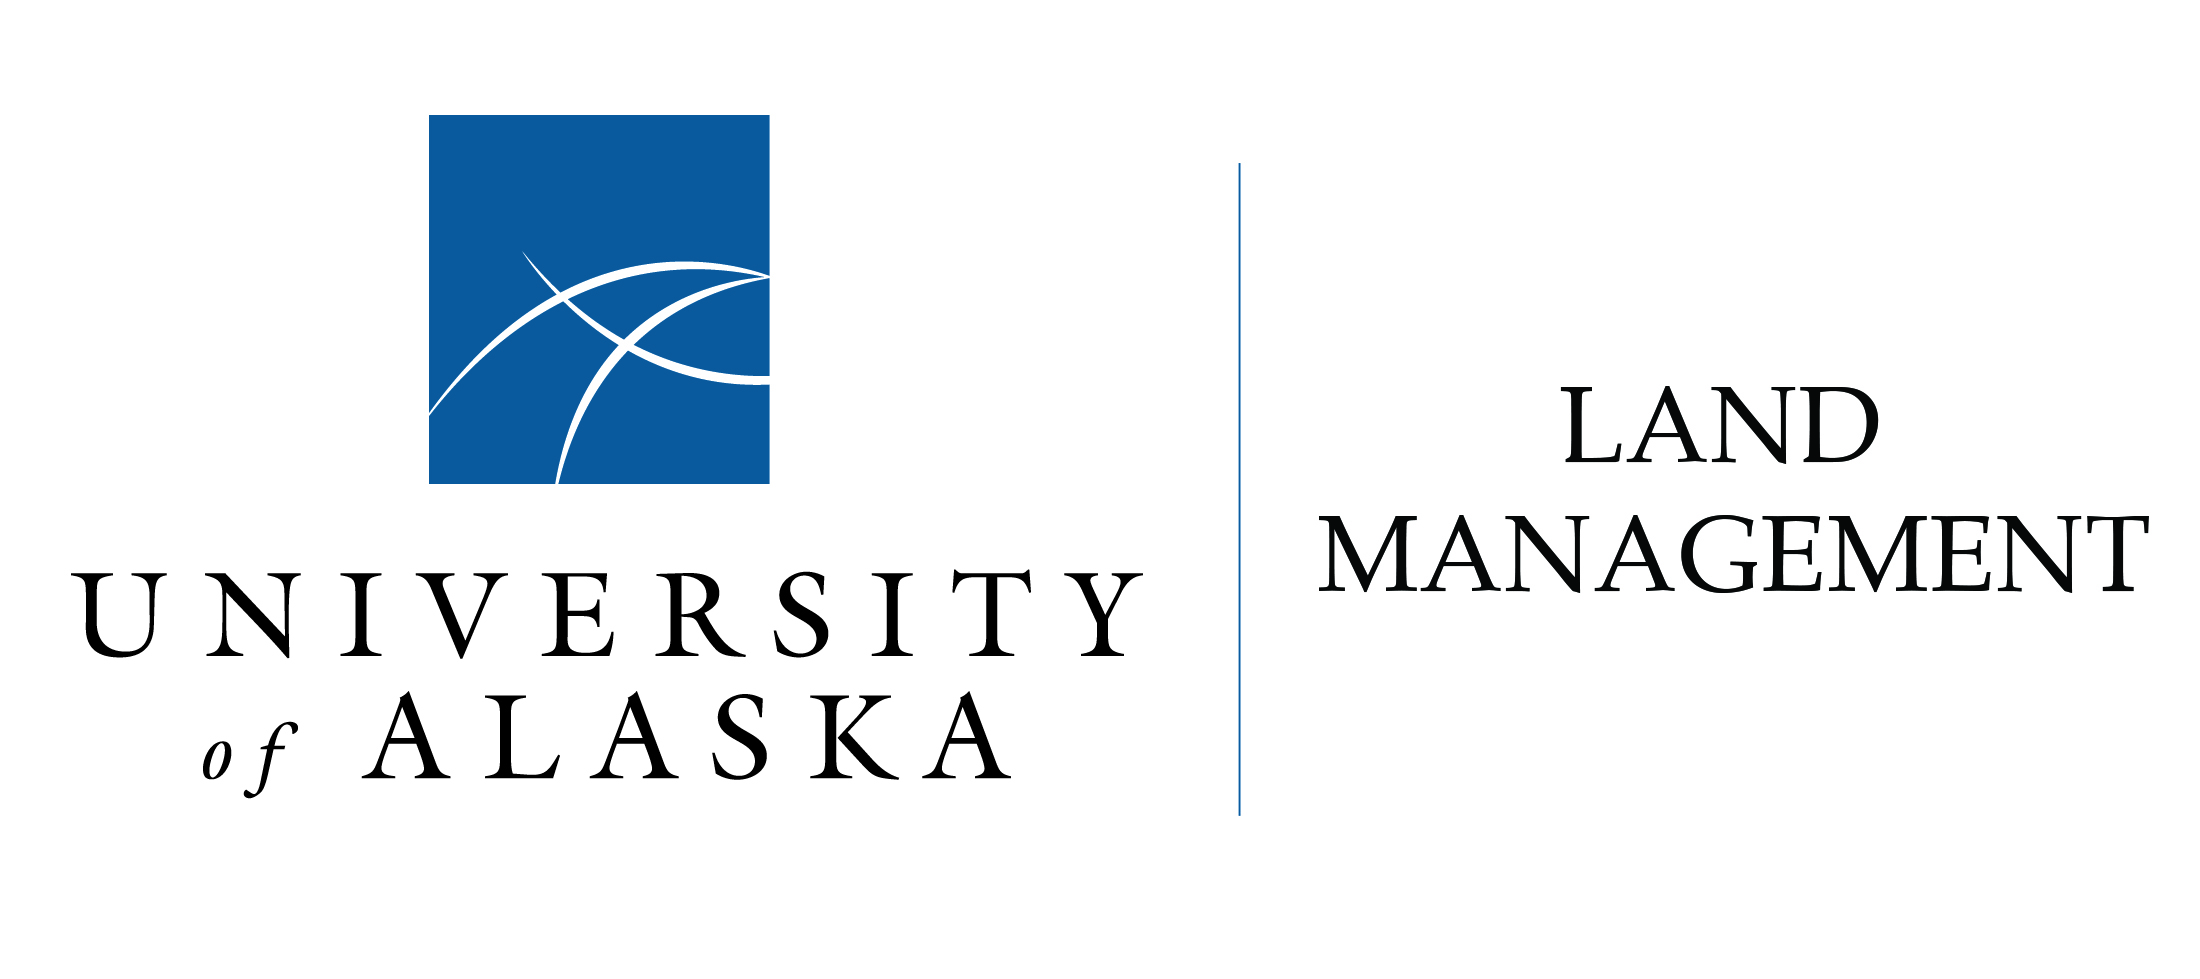 University of Alaska Land Management